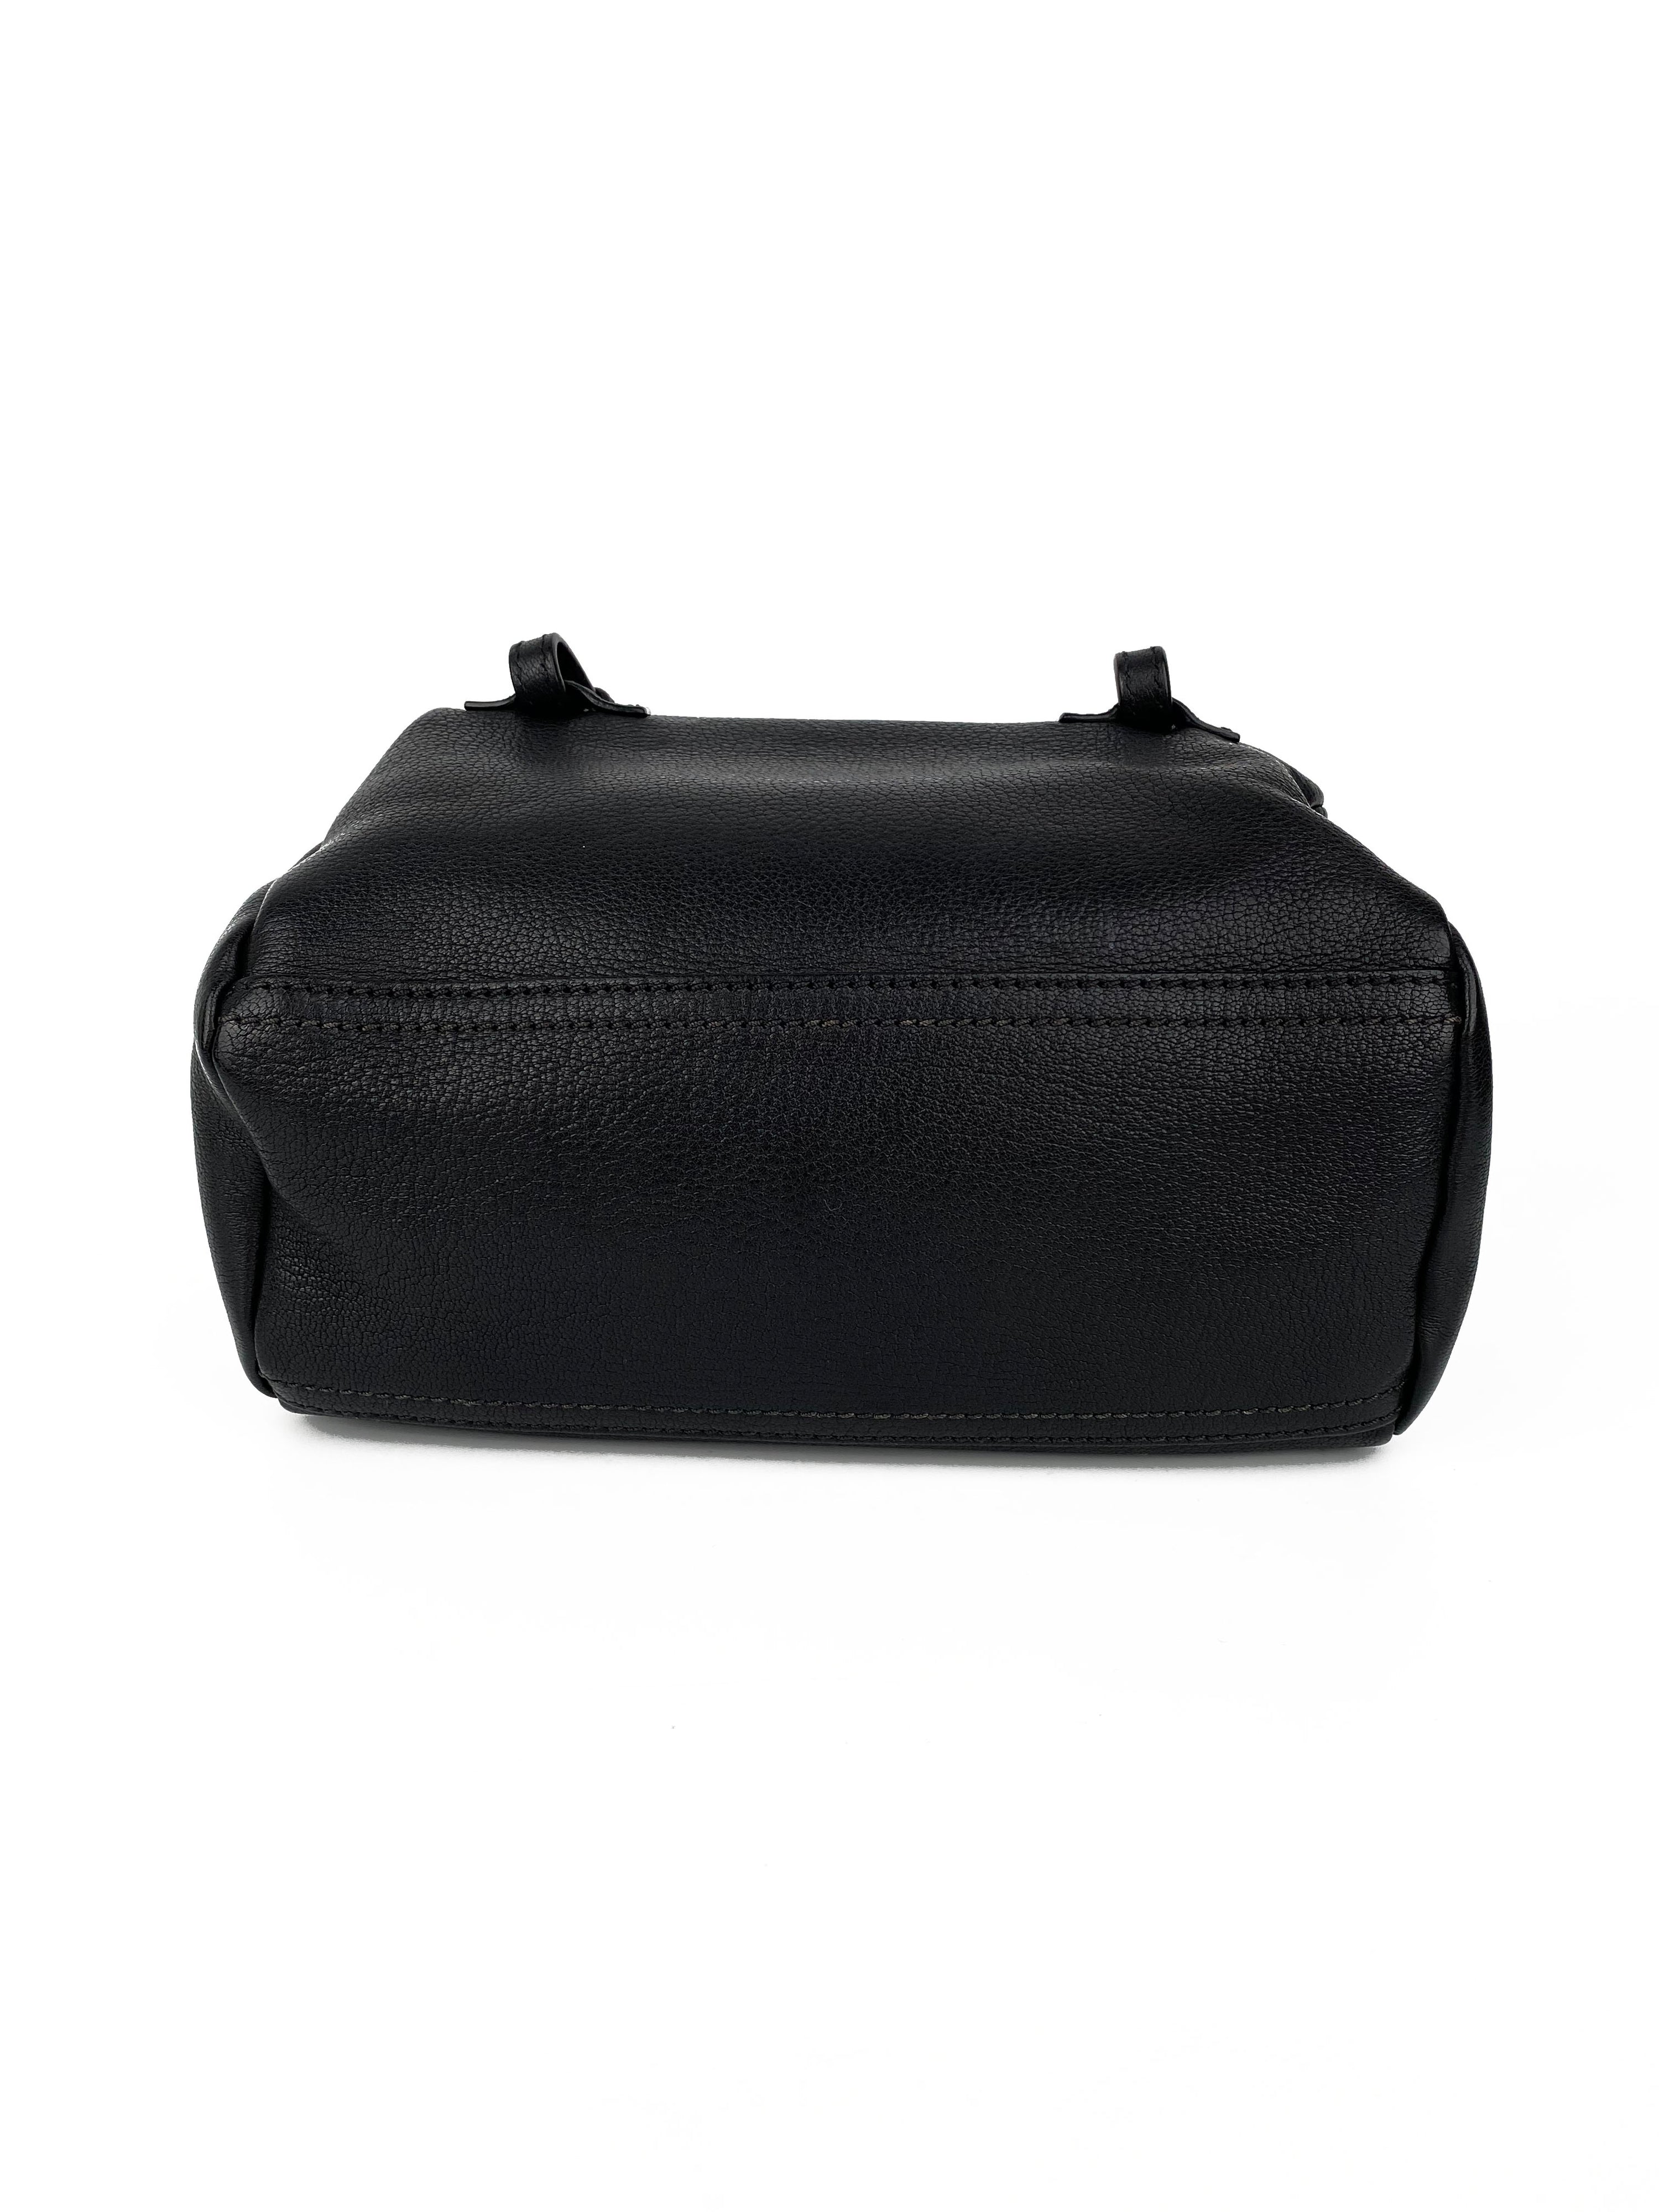 Givenchy Black Pandora Bag